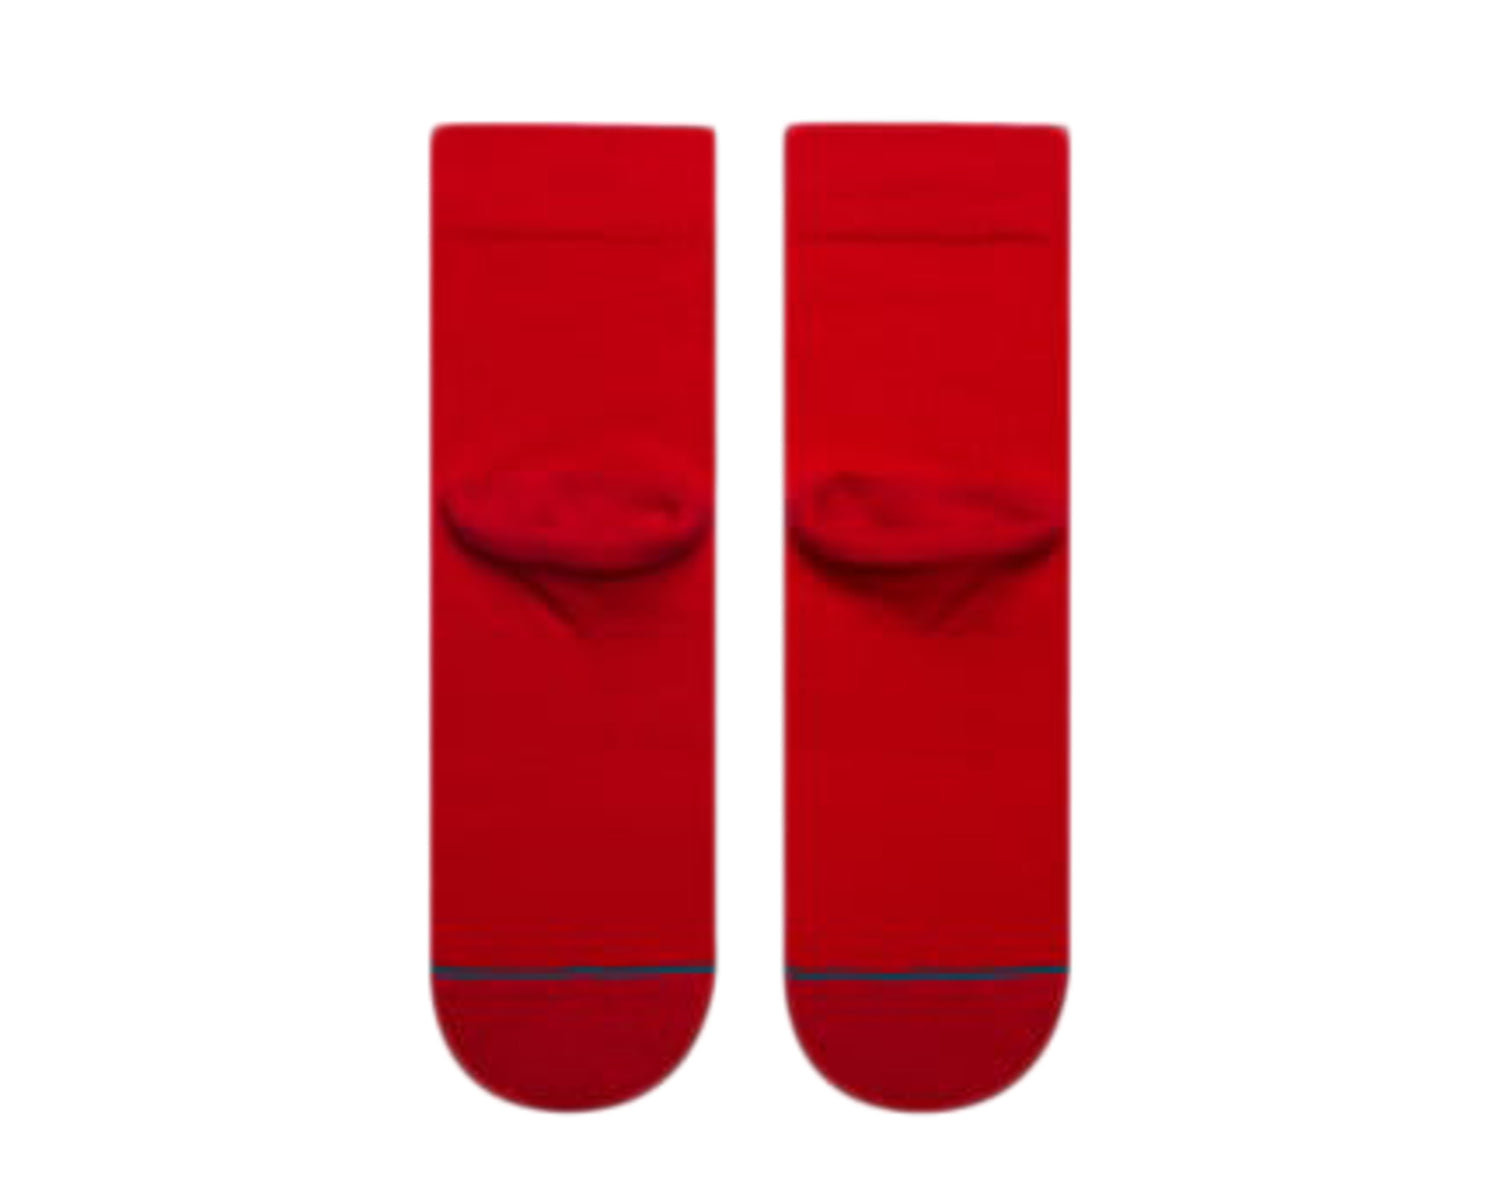 Stance Casual NBA Logoman QTR Ankle Socks